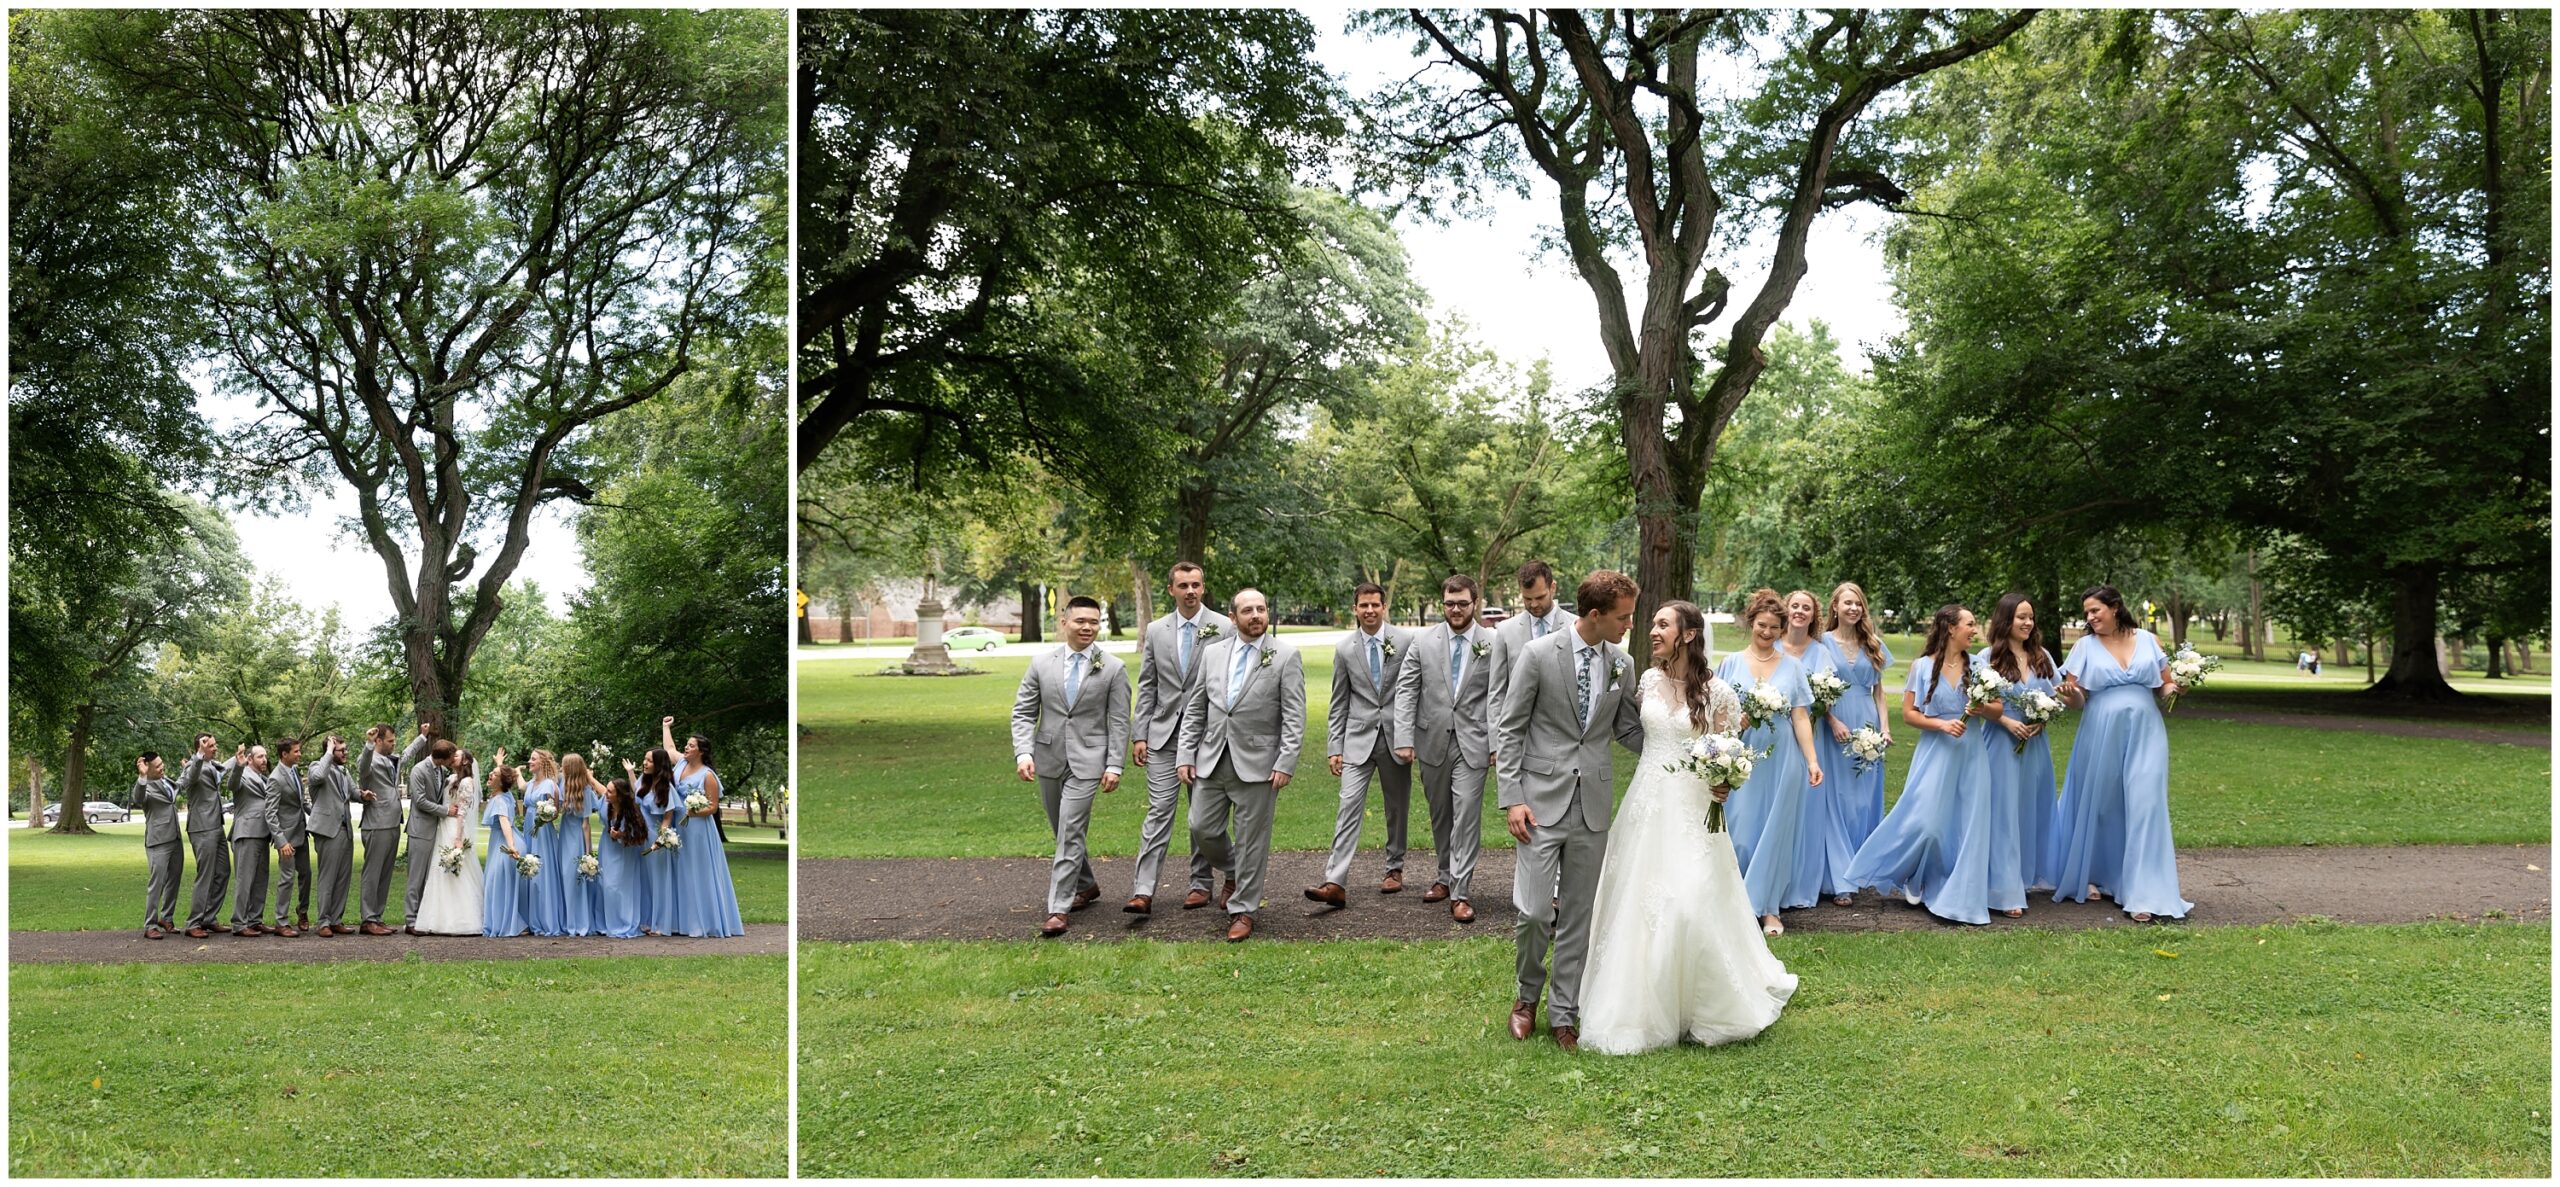 Allegheny Commons Park Wedding Photos by Pittsburgh Wedding Photographer Catherine Acevedo Photography